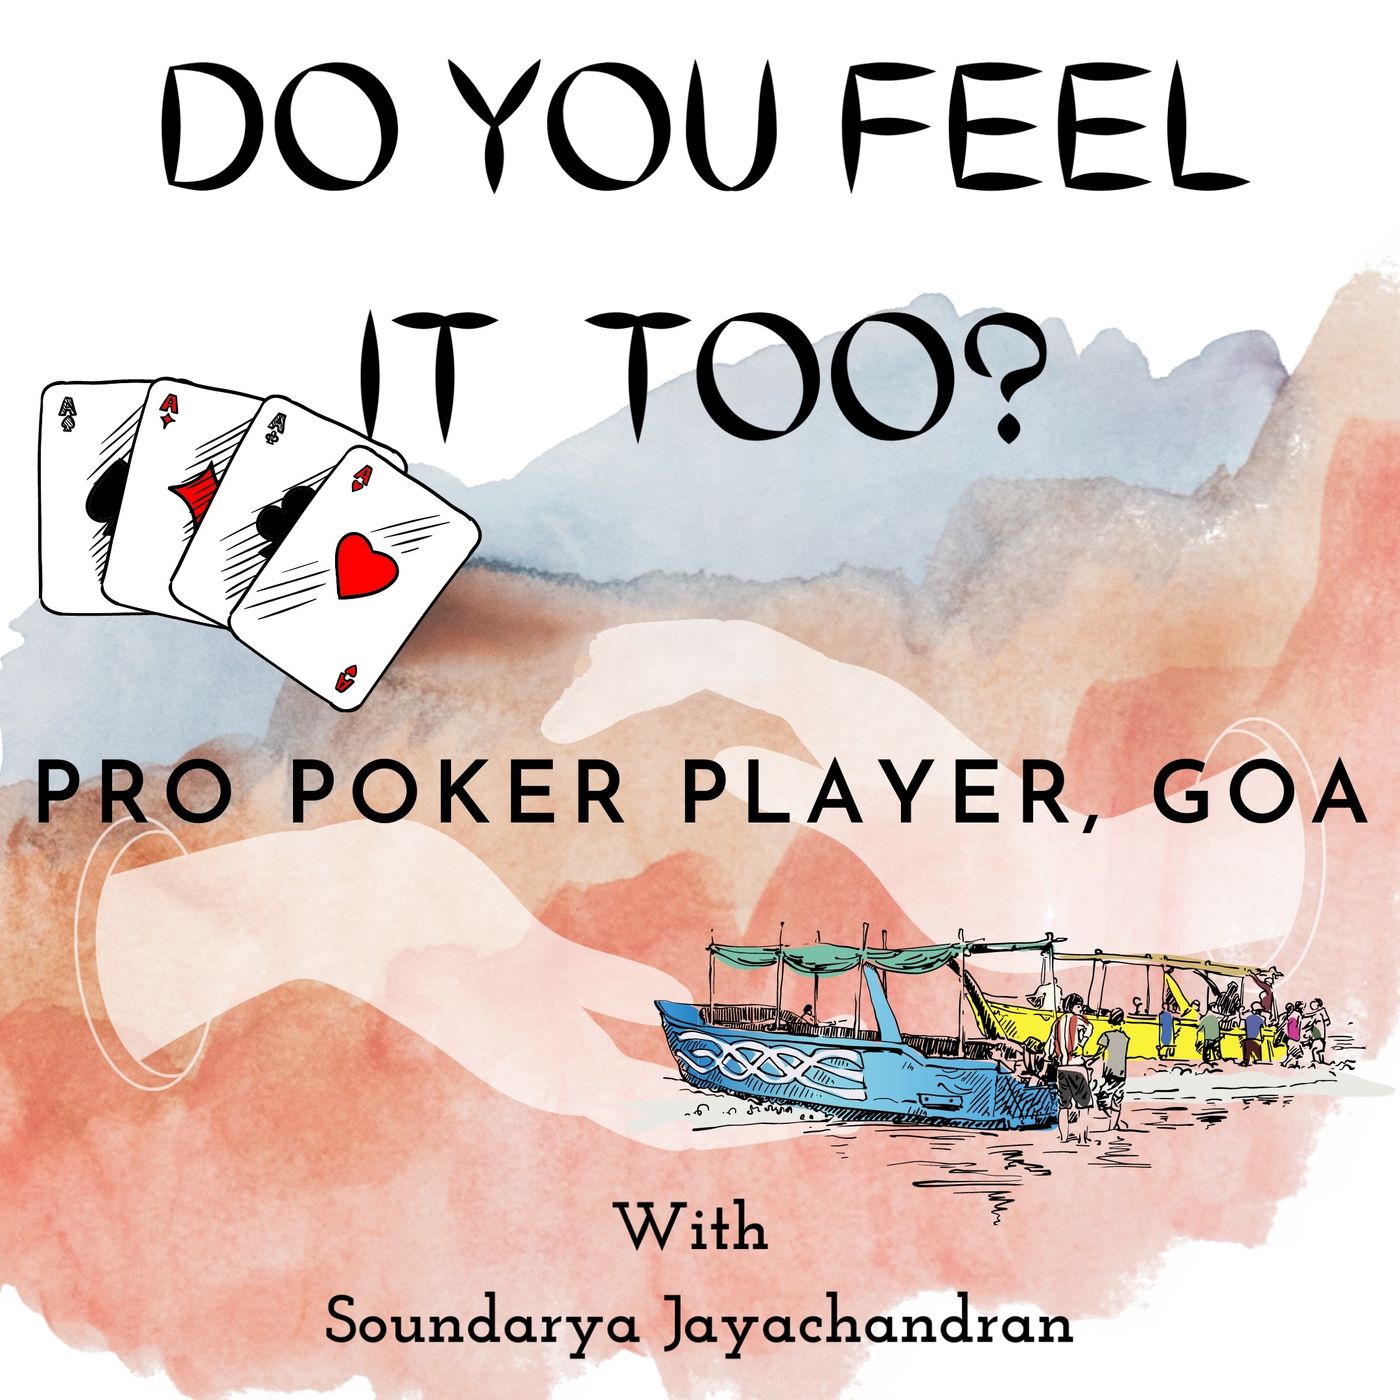 Pro Poker Player, Goa